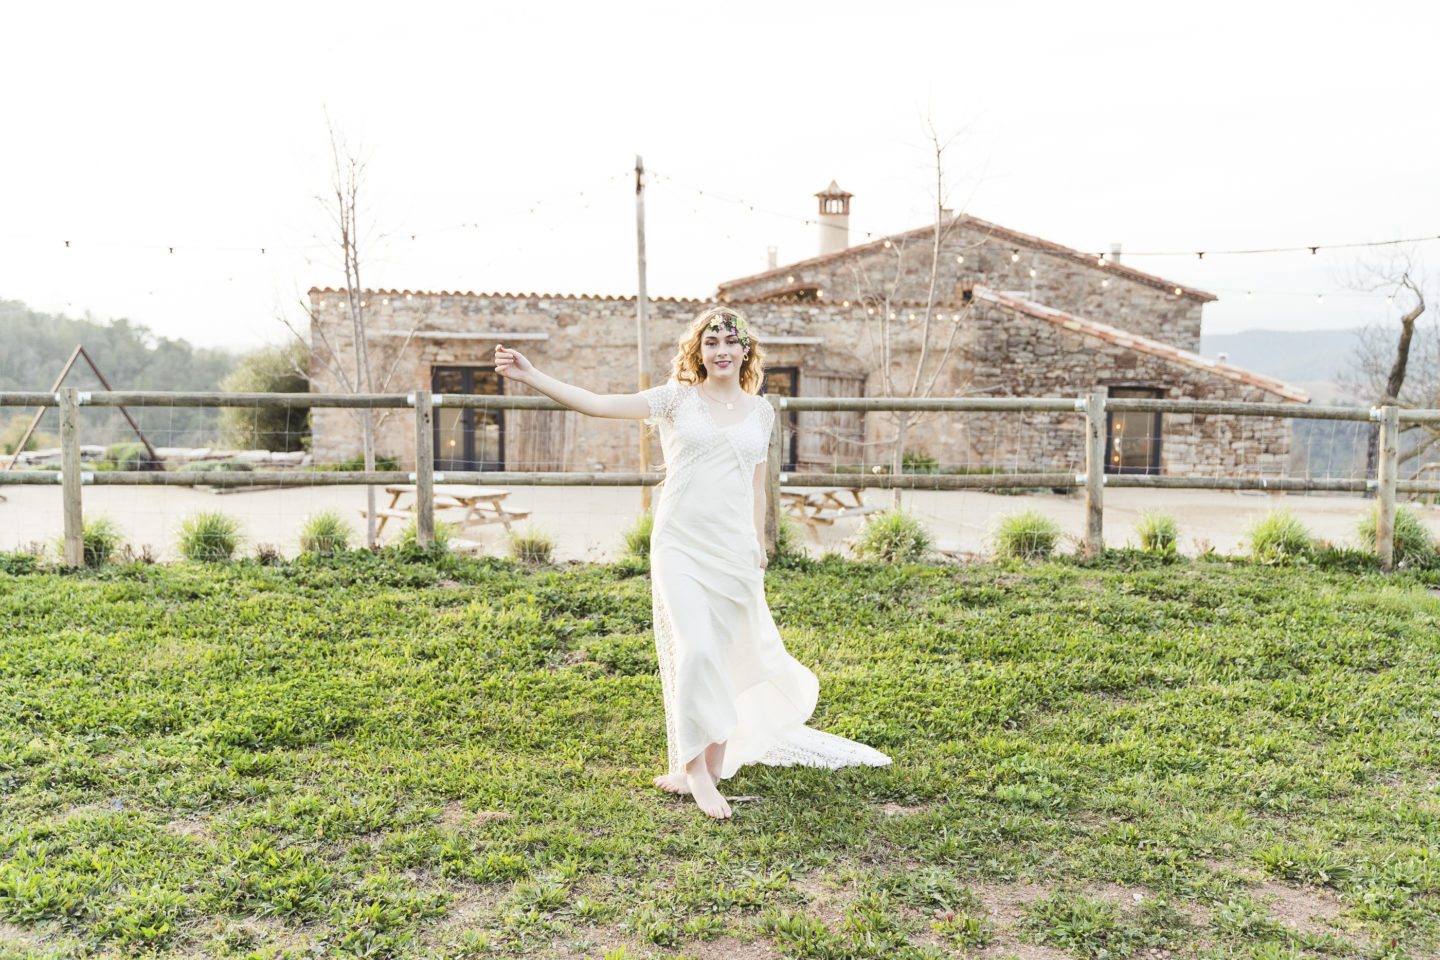 Ethical Wedding Inspiration With Sandra Jorda Dress In Barcelona, Spain